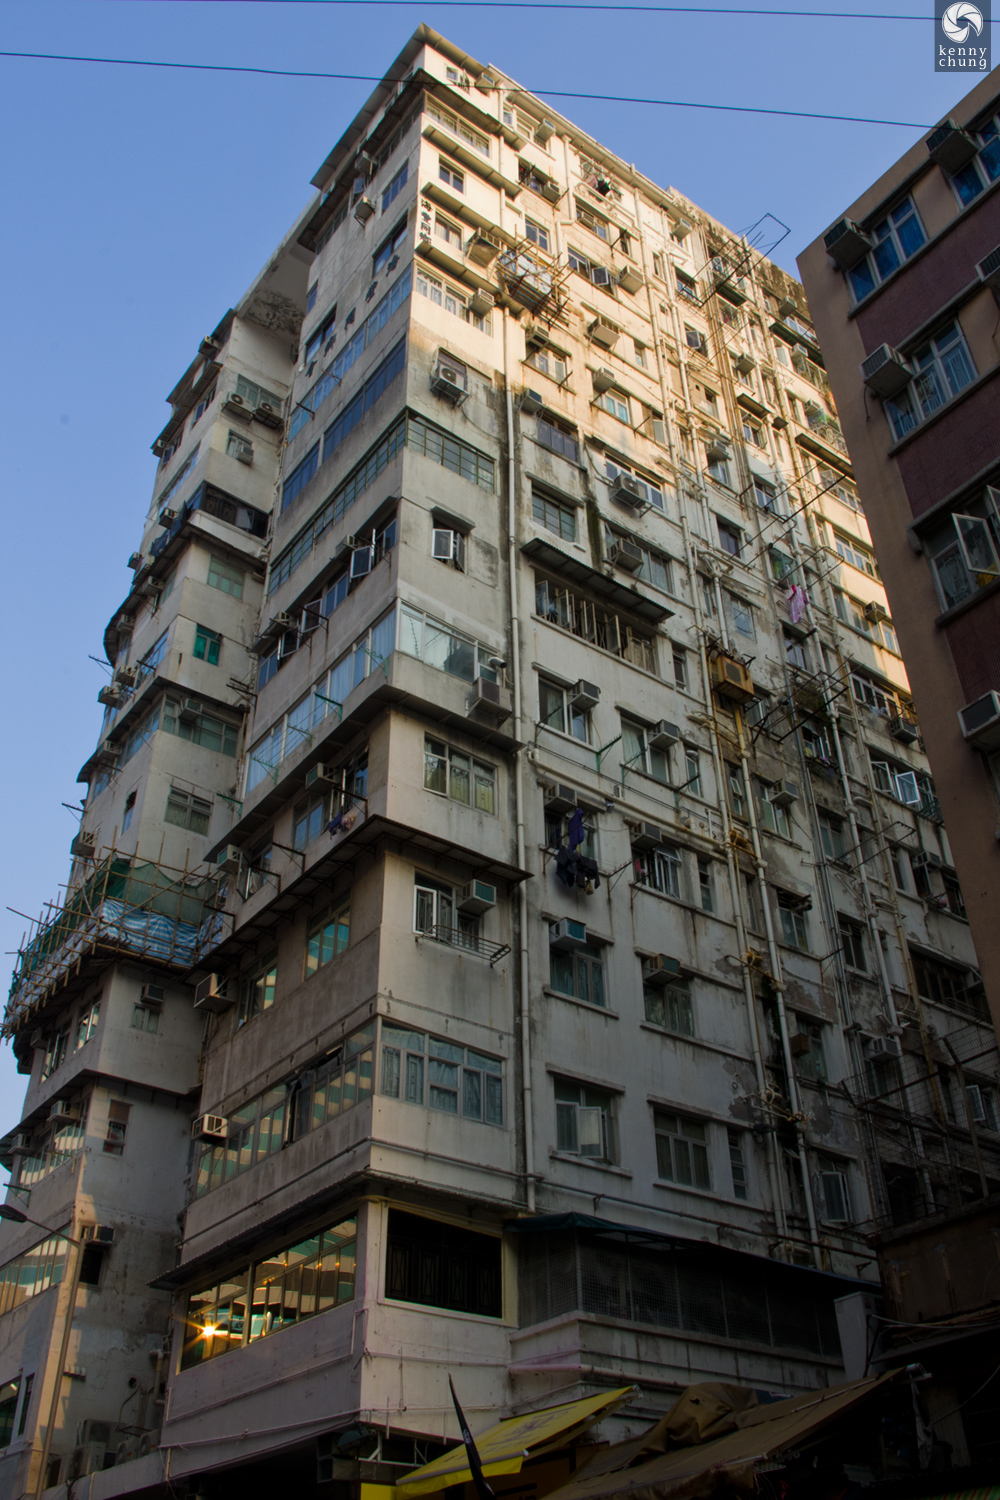 An older style building in Mong Kok, Hong Kong